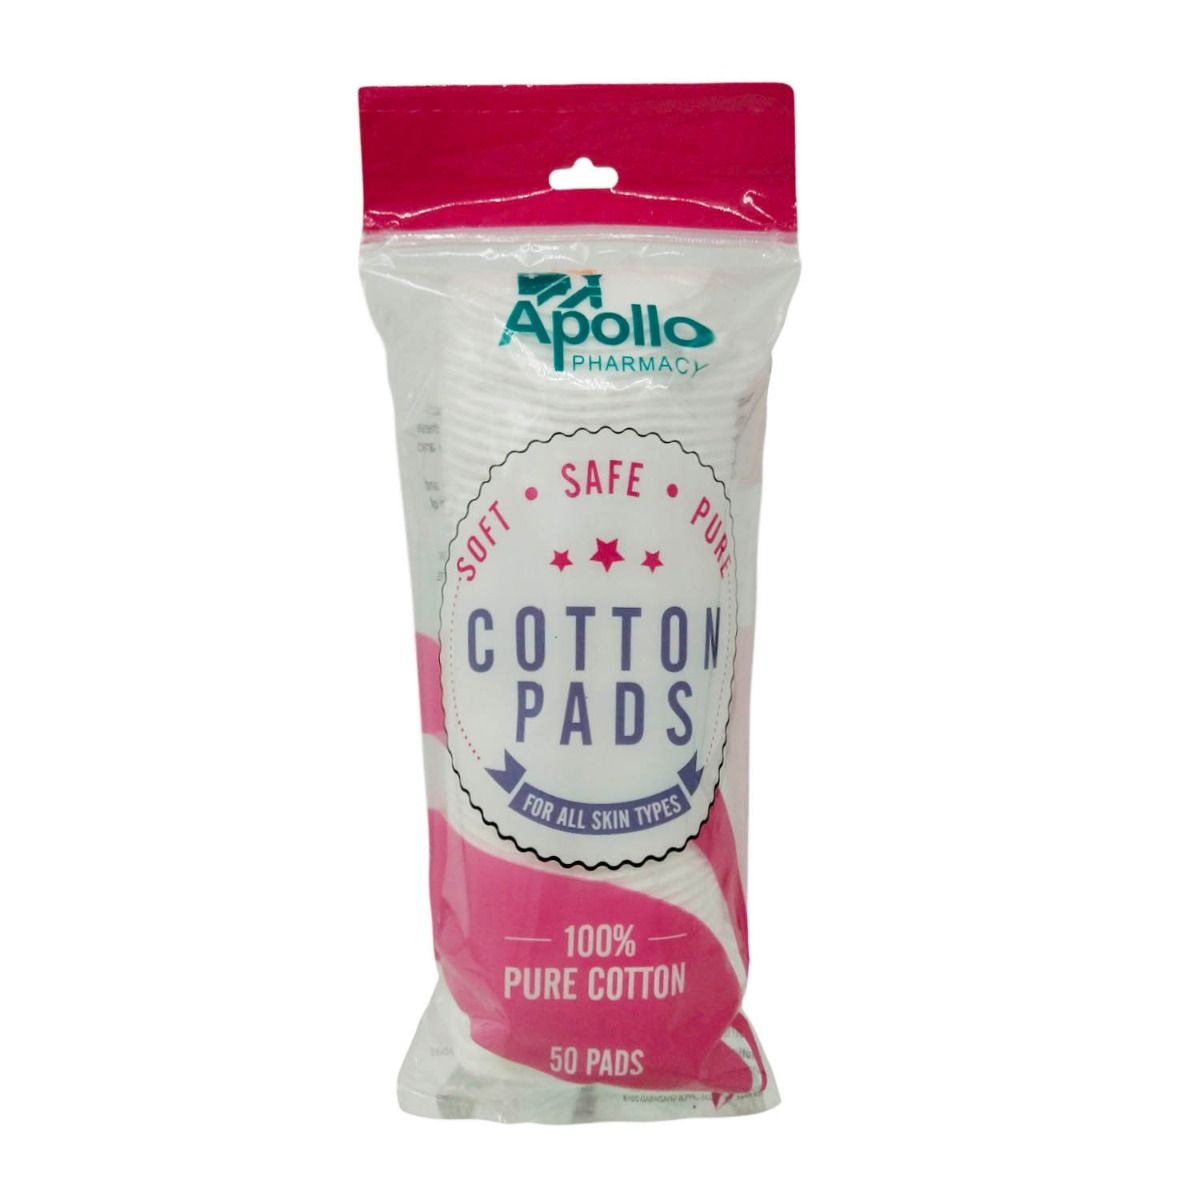 Buy Apollo Pharmacy Cotton Pads, 50 Count Online